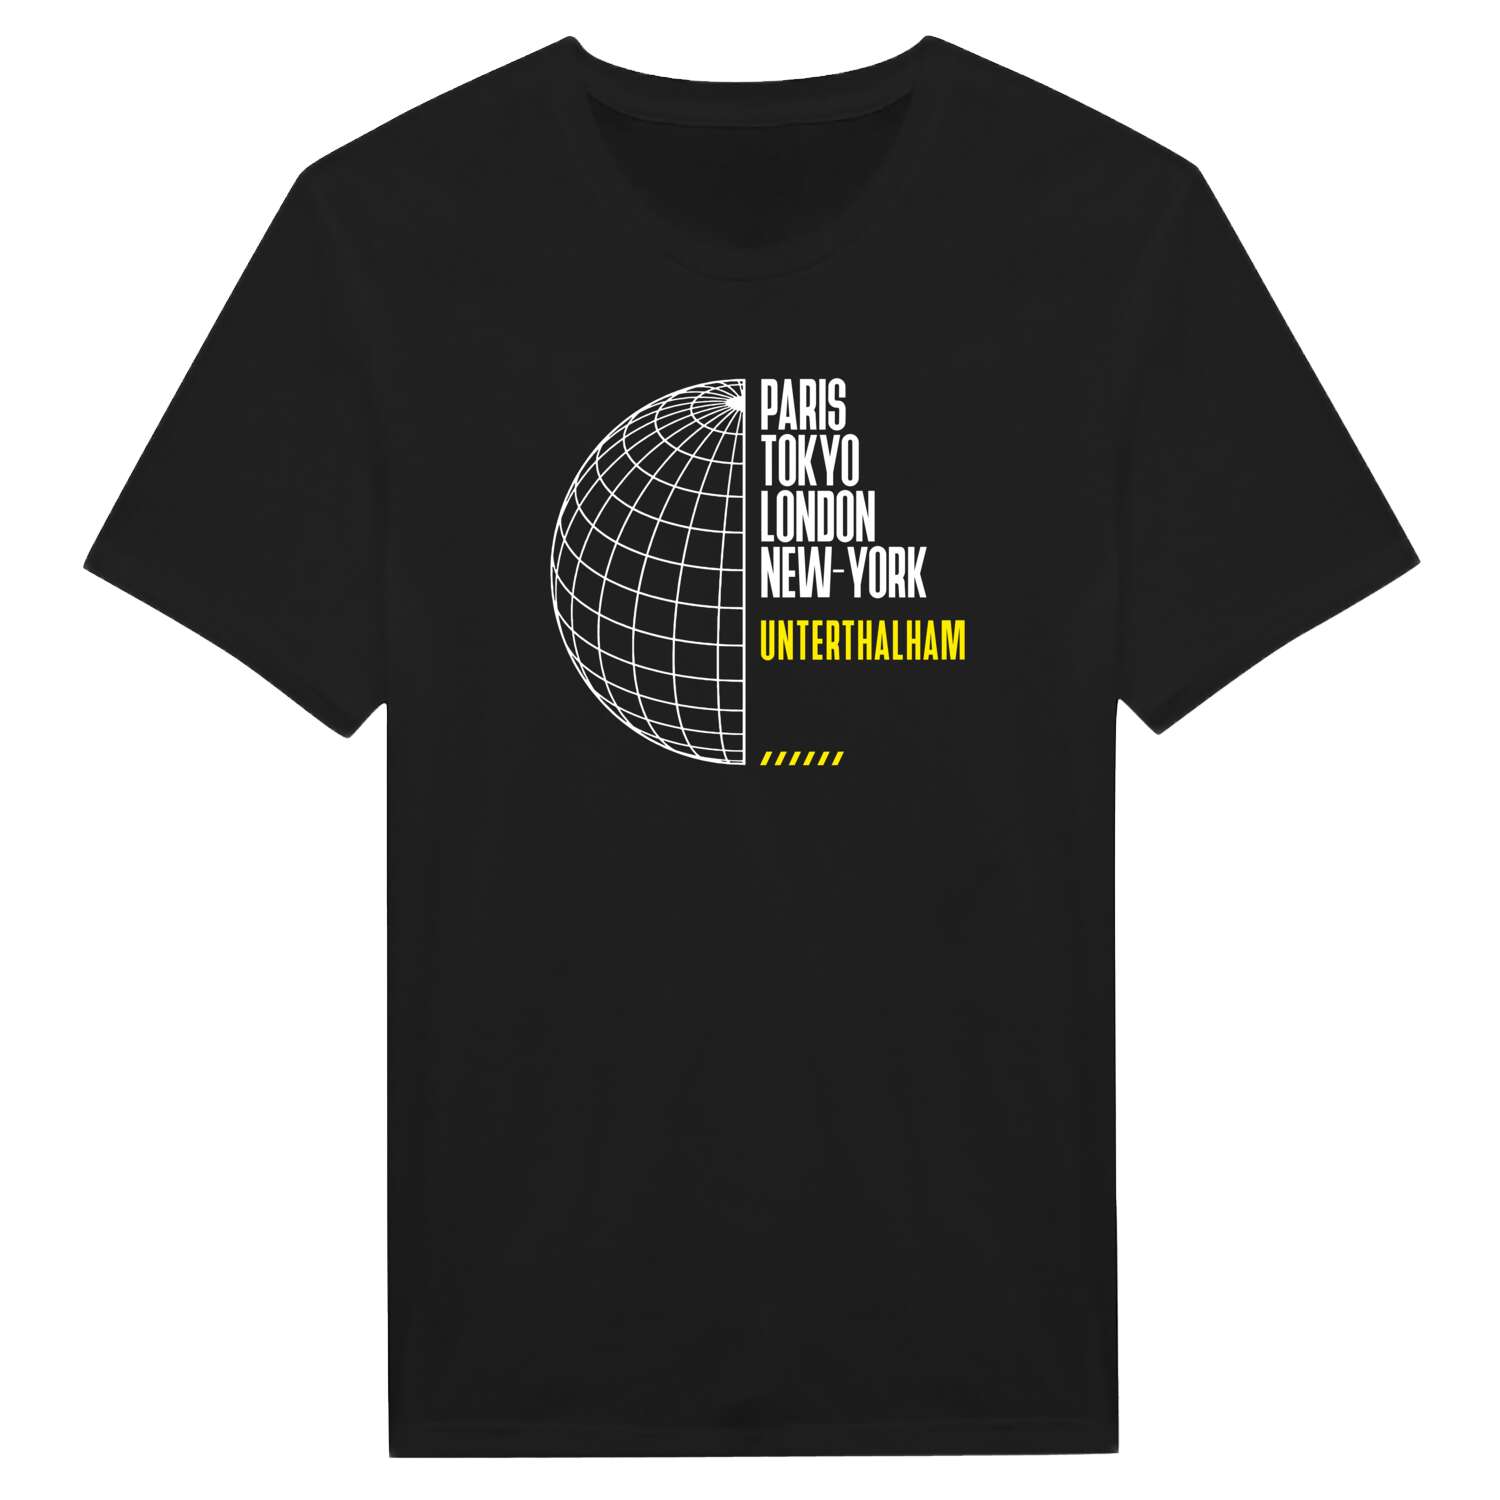 Unterthalham T-Shirt »Paris Tokyo London«